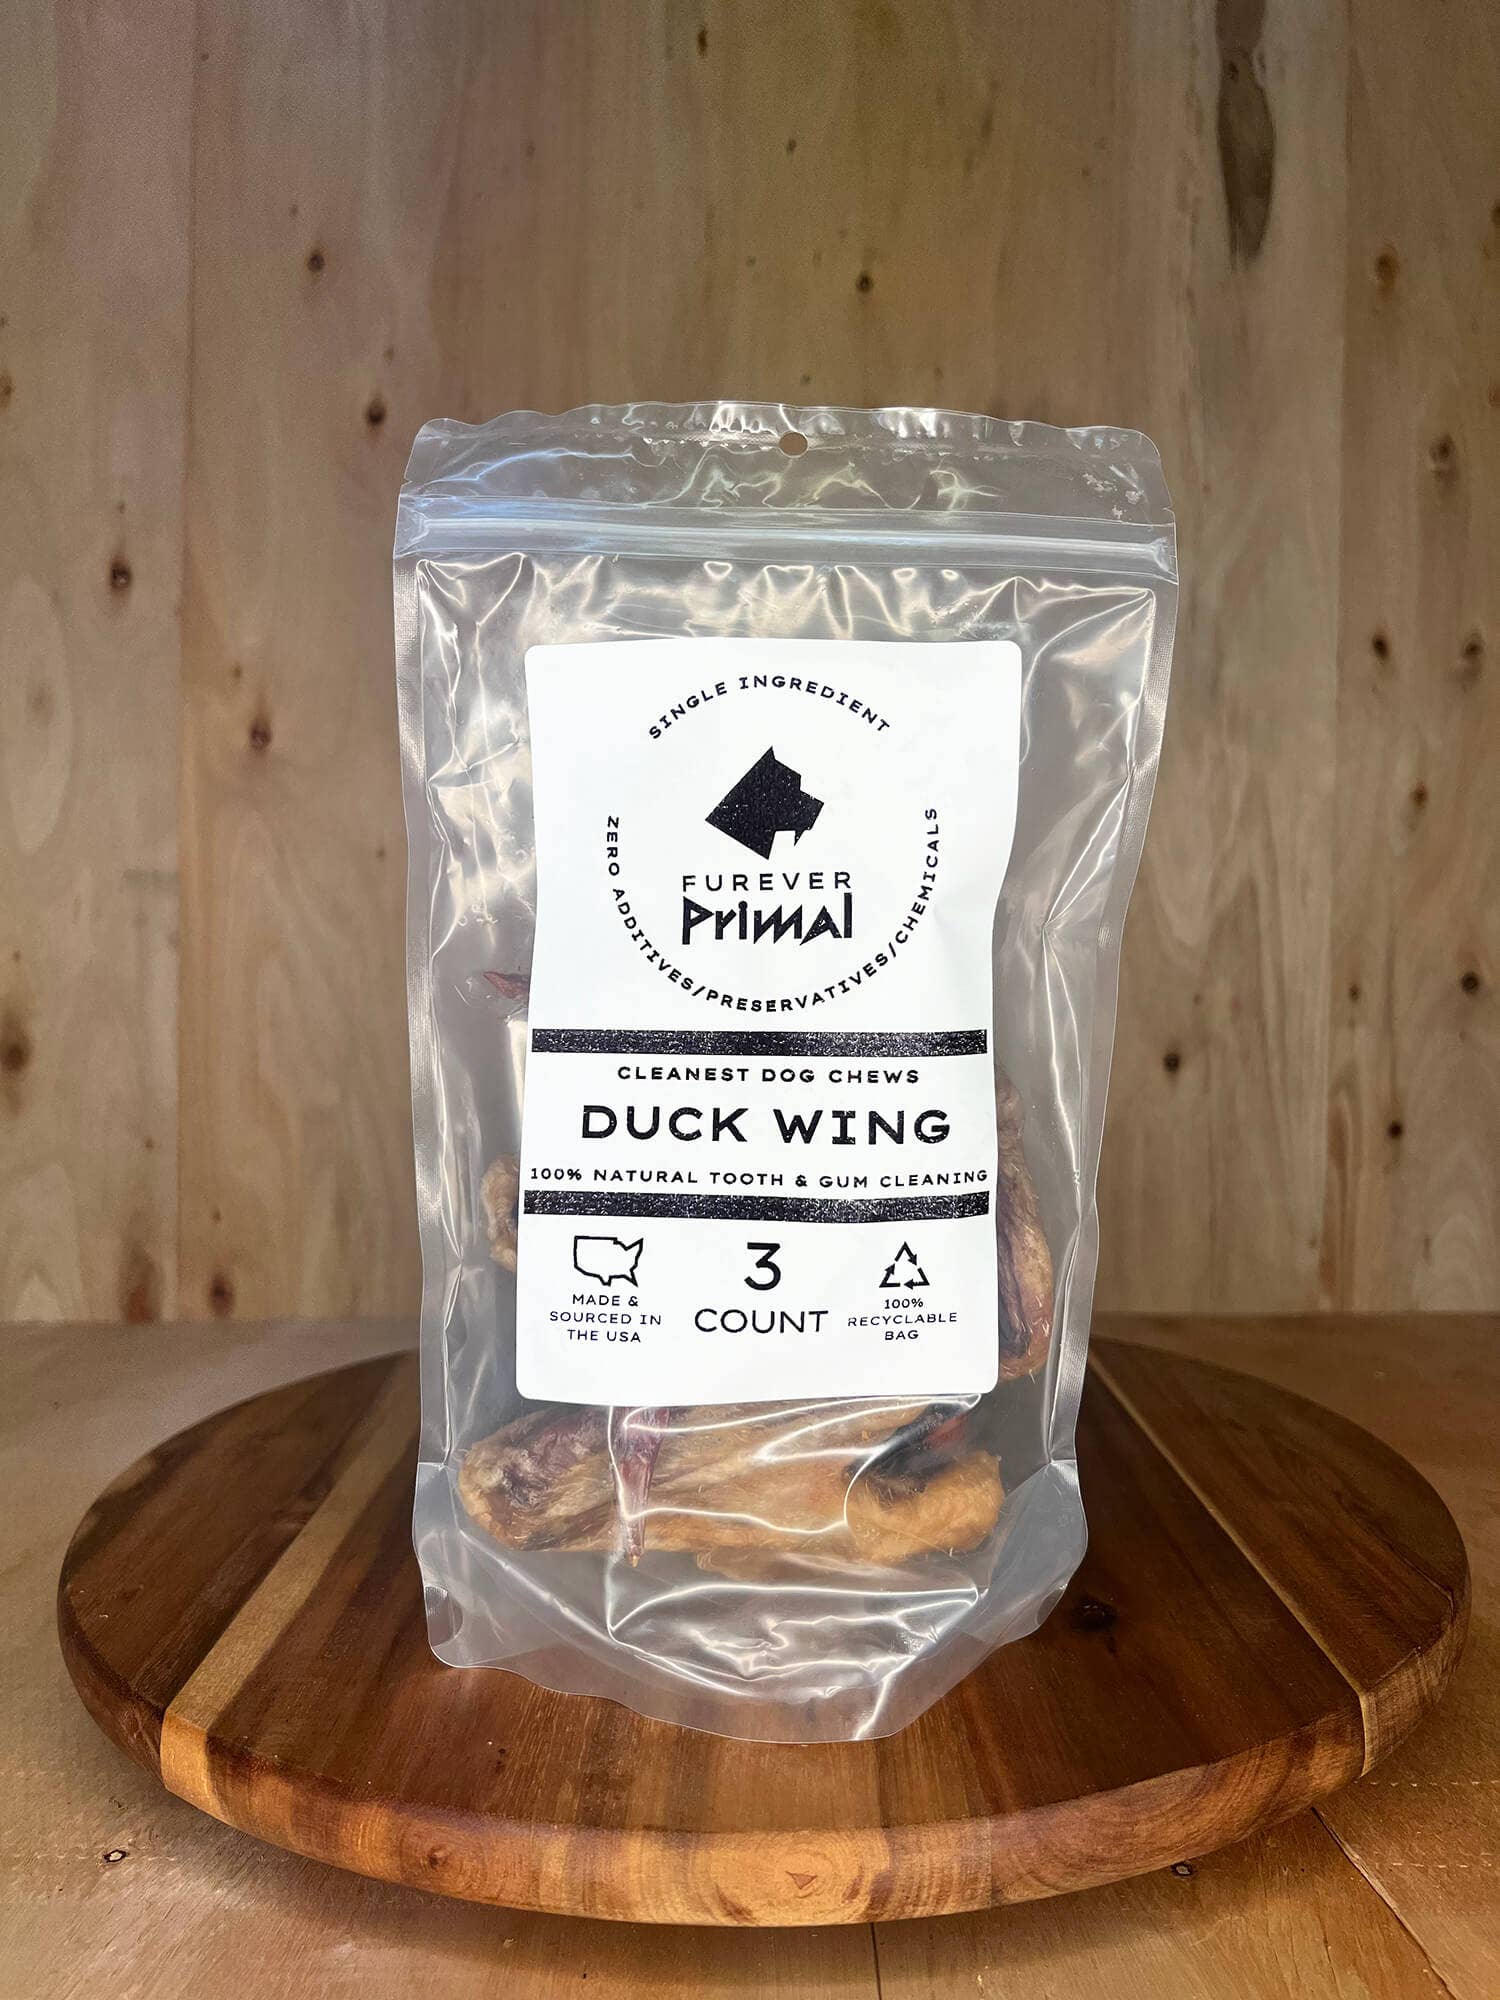 Furever Primal - Bagged Dog Chew: Duck Wing - Natural Single Ingredient: 3 pack